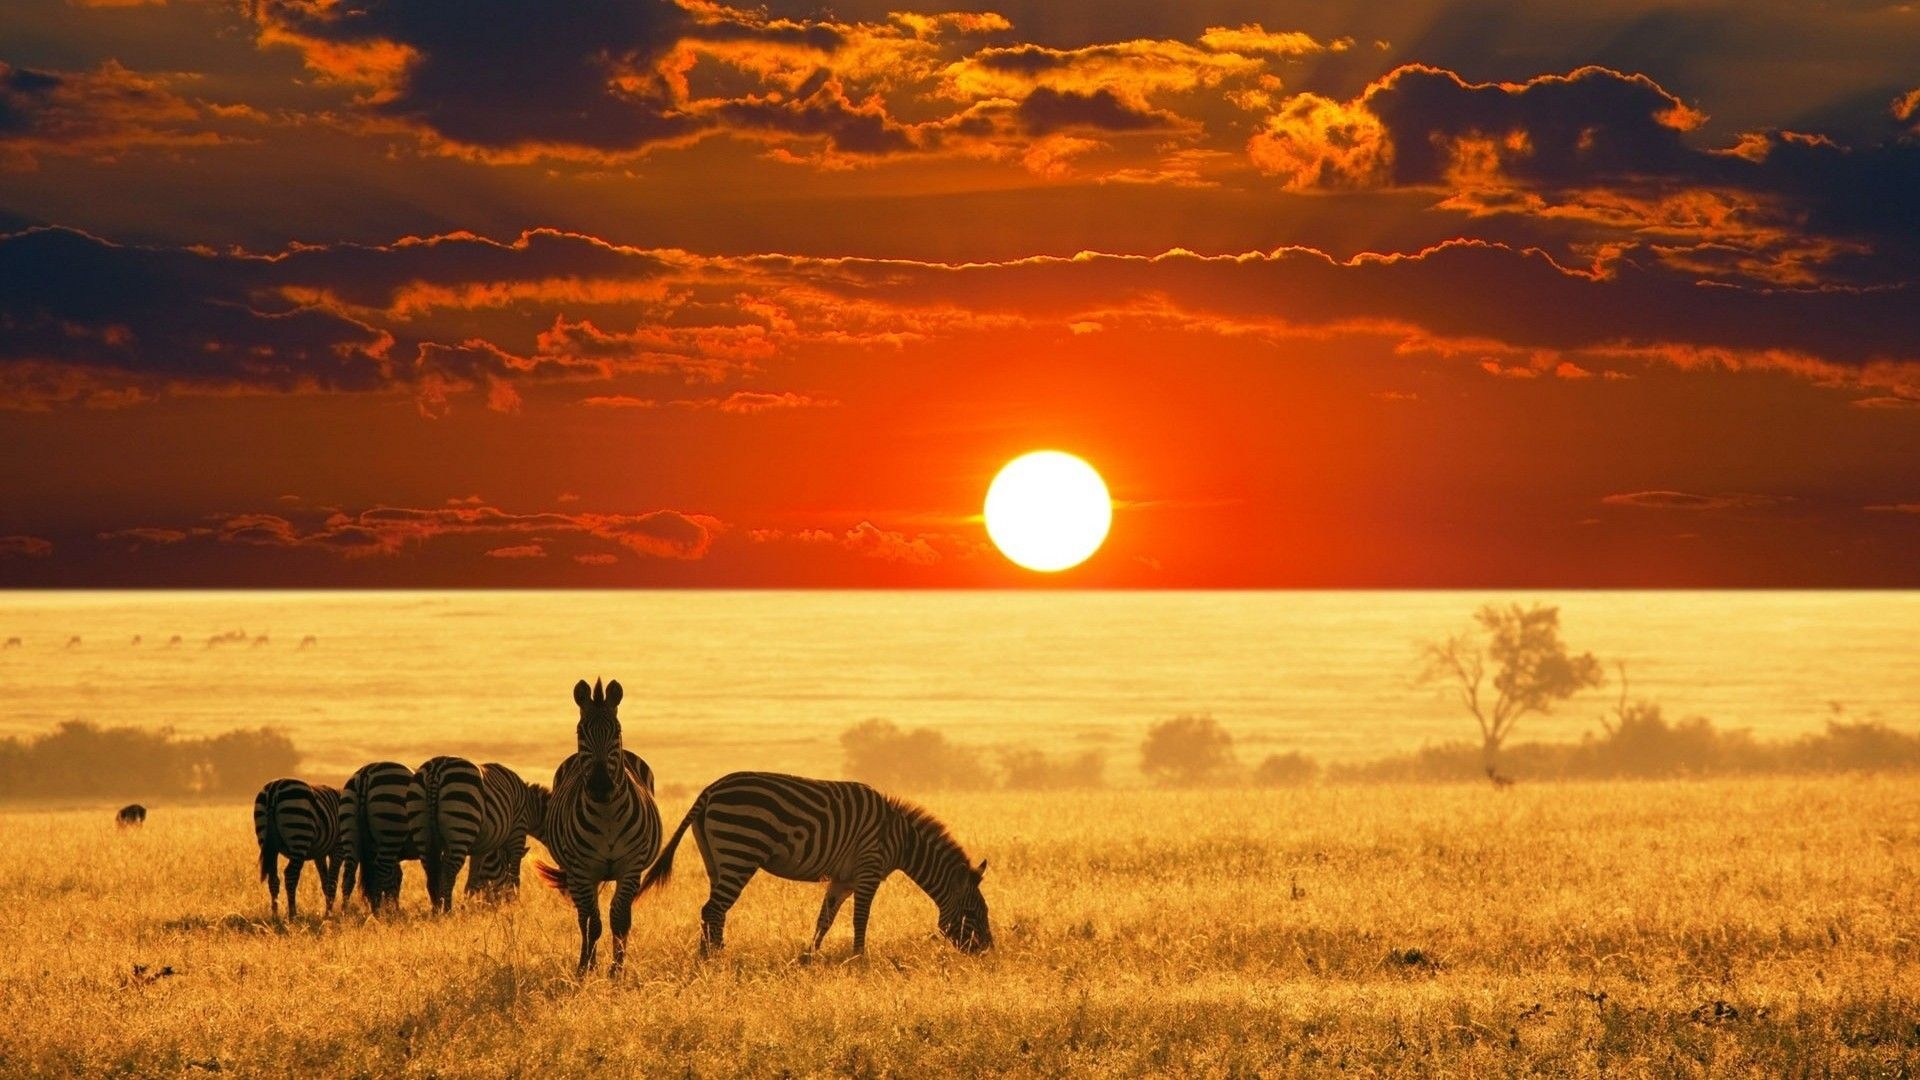 African safari desktop wallpapers, Stunning wildlife visuals, High-quality animal photography, Serene safari landscapes, 1920x1080 Full HD Desktop